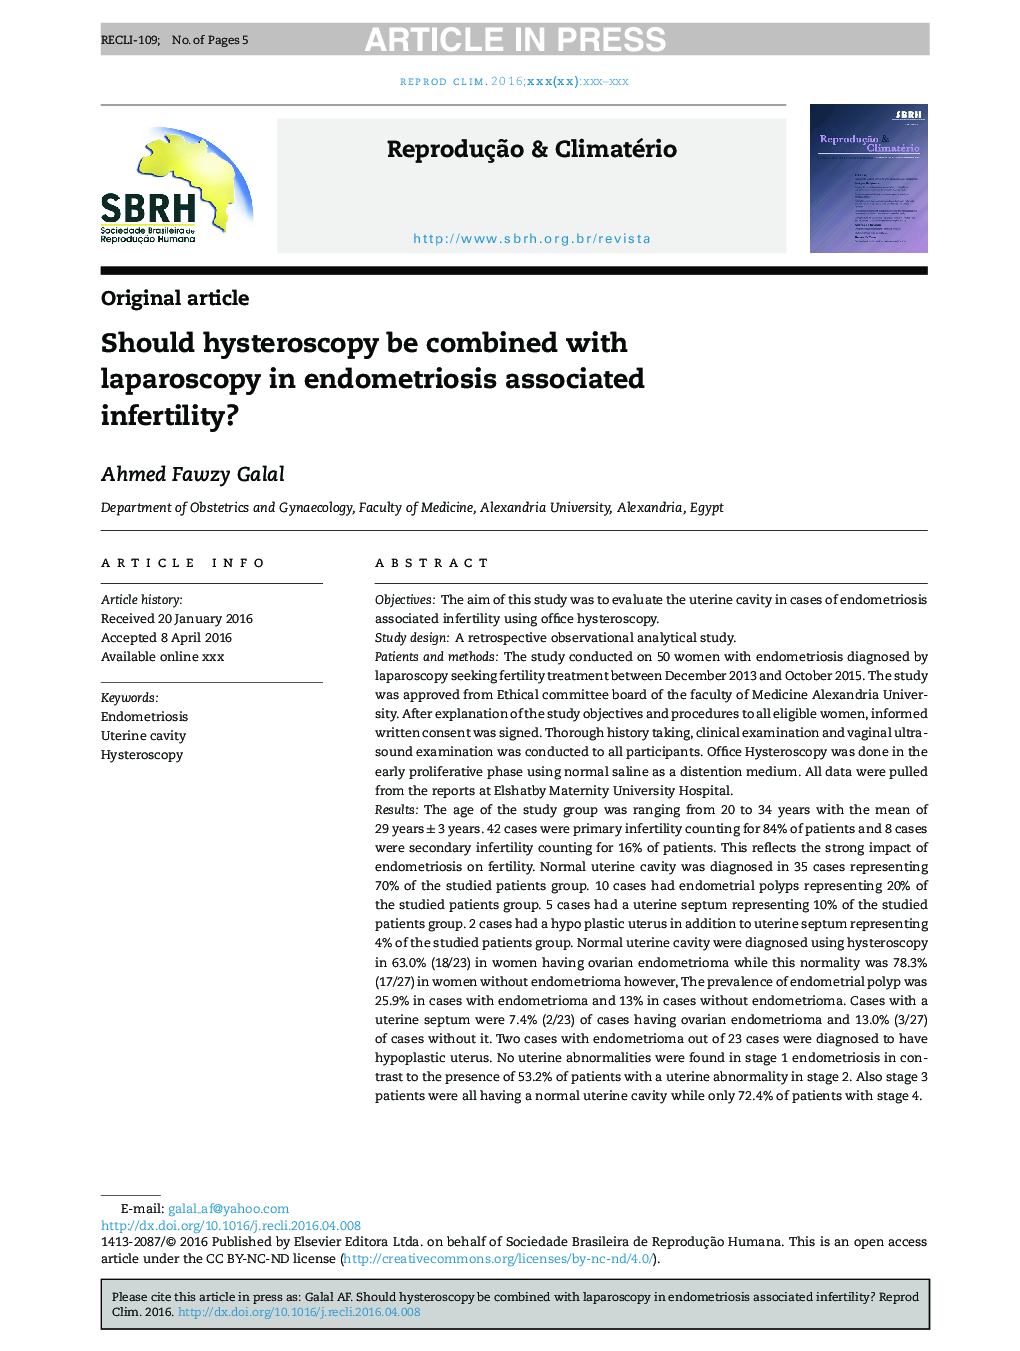 Should hysteroscopy be combined with laparoscopy in endometriosis associated infertility?